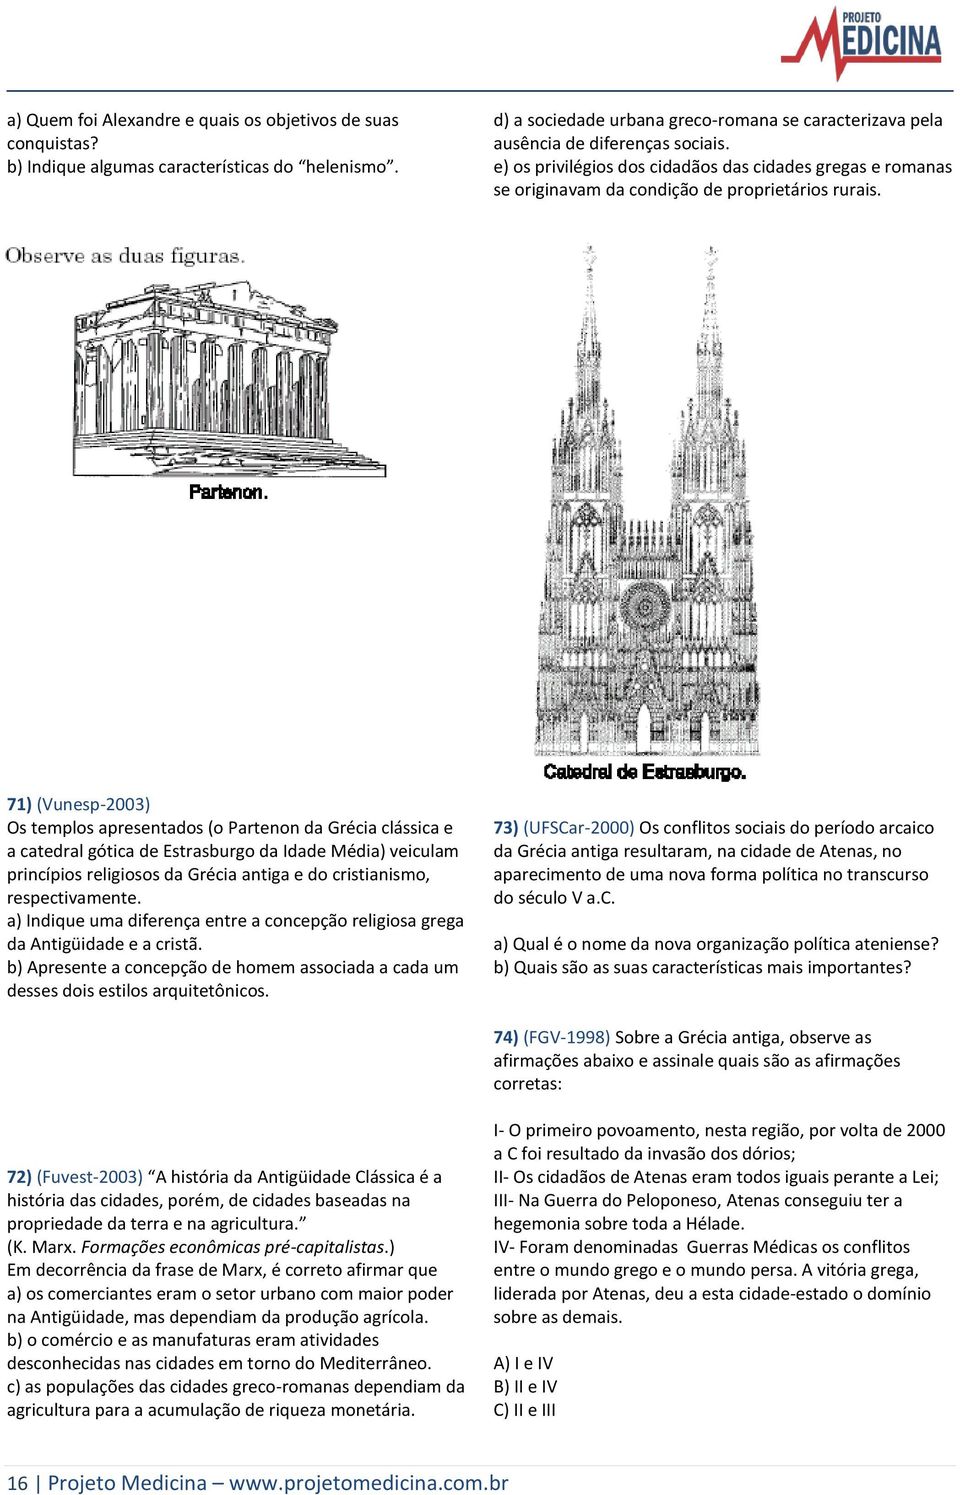 71) (Vunesp-2003) Os templos apresentados (o Partenon da Grécia clássica e a catedral gótica de Estrasburgo da Idade Média) veiculam princípios religiosos da Grécia antiga e do cristianismo,